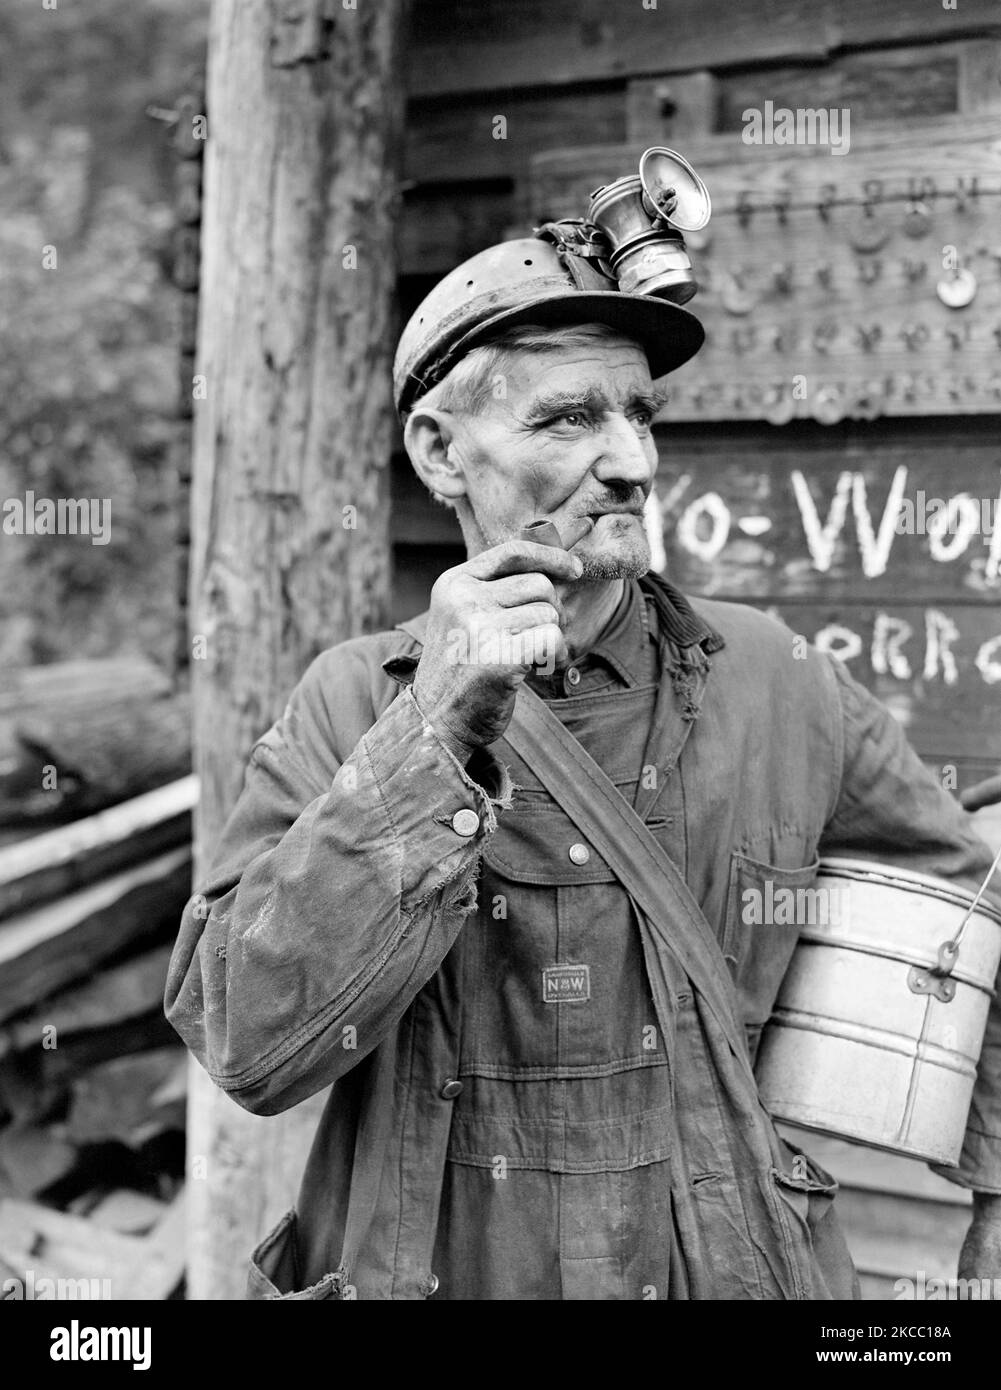 A miner from the P V & K Coal Company, Clover Mine, Lejunior, Harlan County, Kentucky. Stock Photo